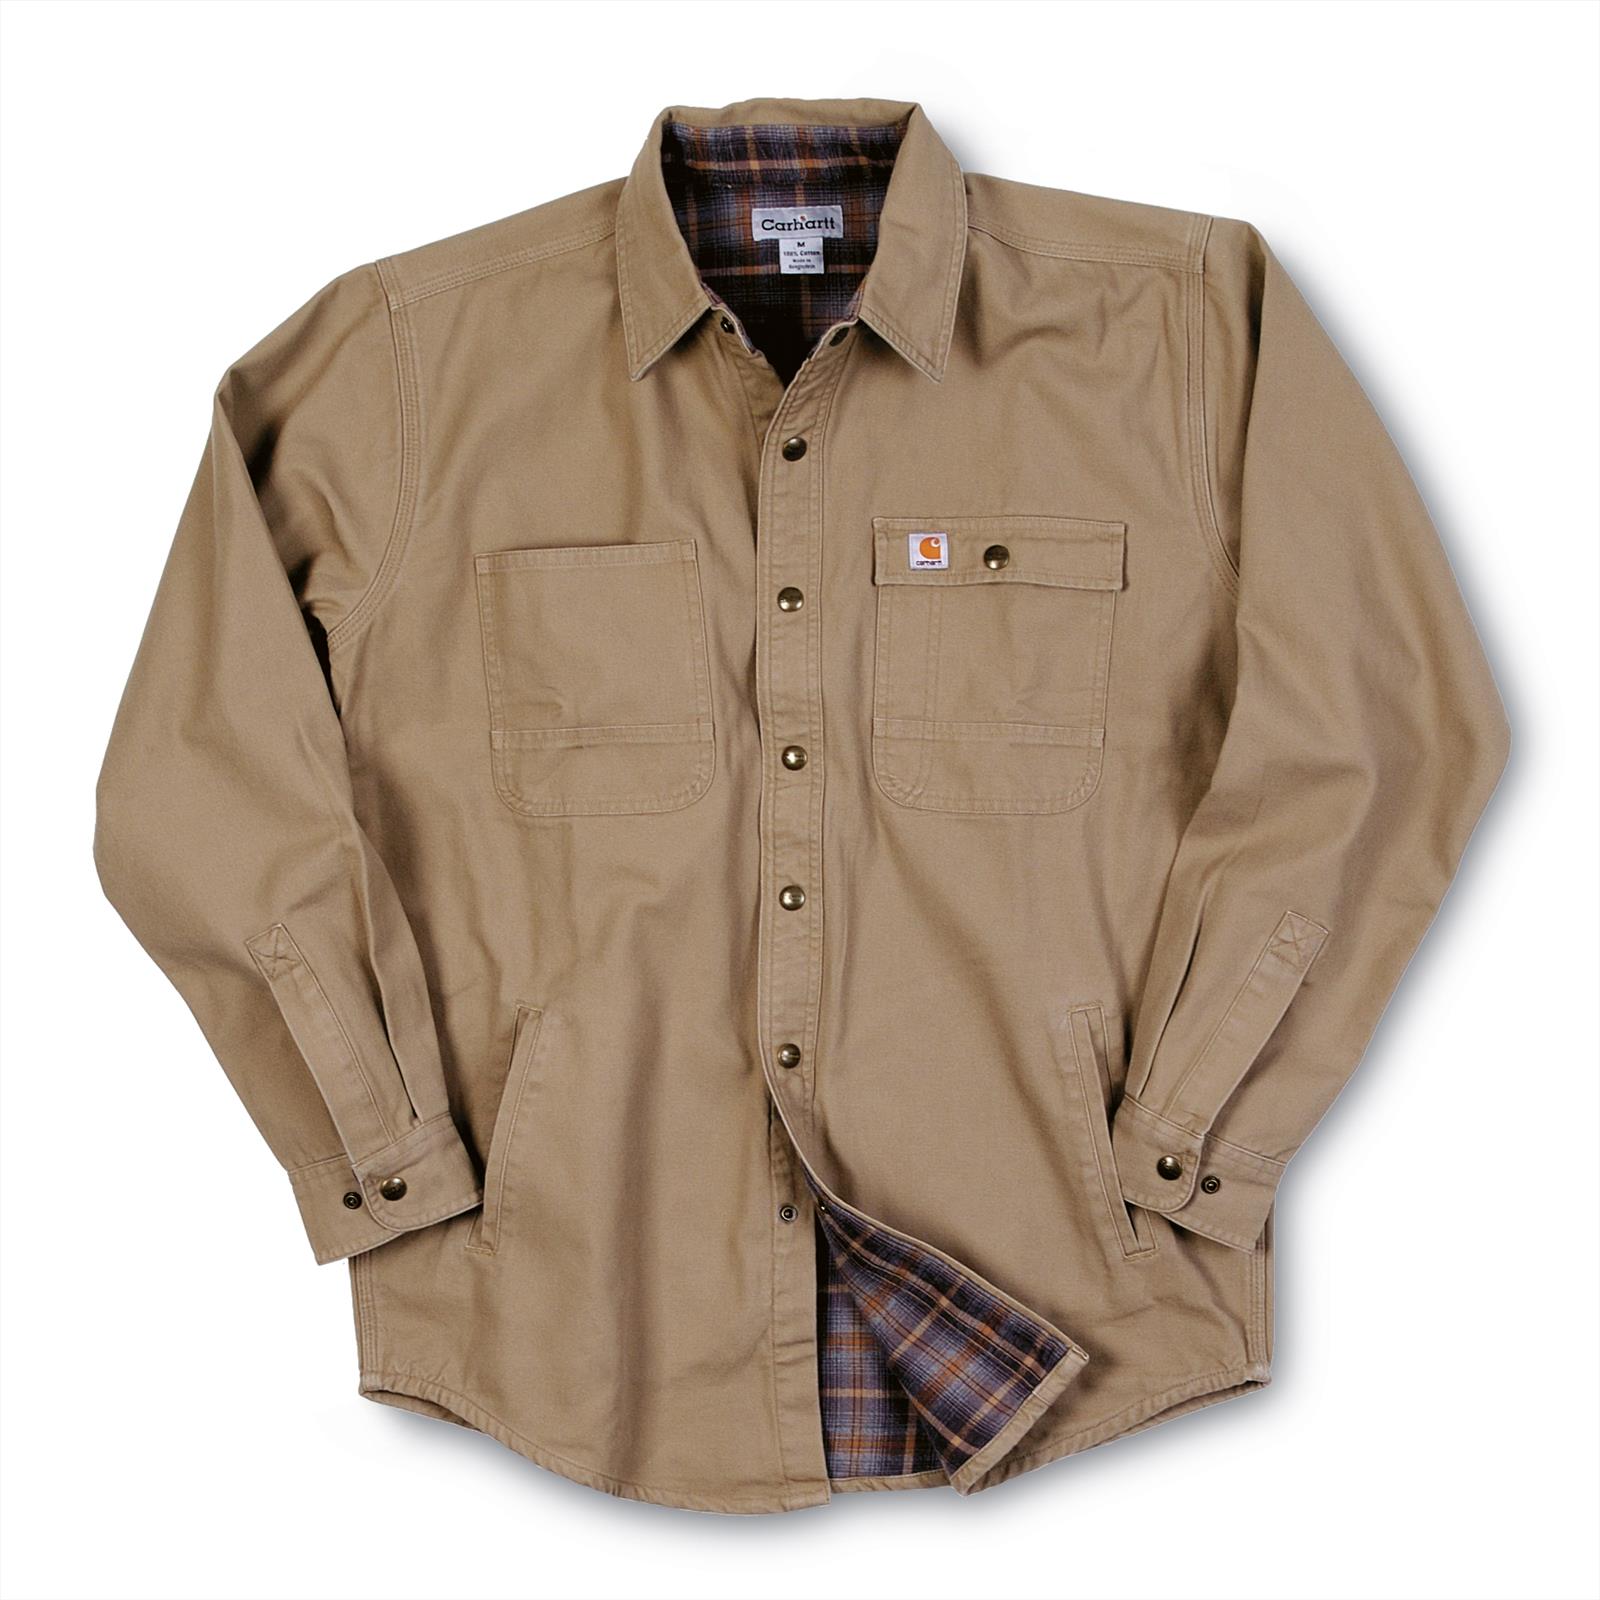 Carhartt ES168 Shirt Jacket